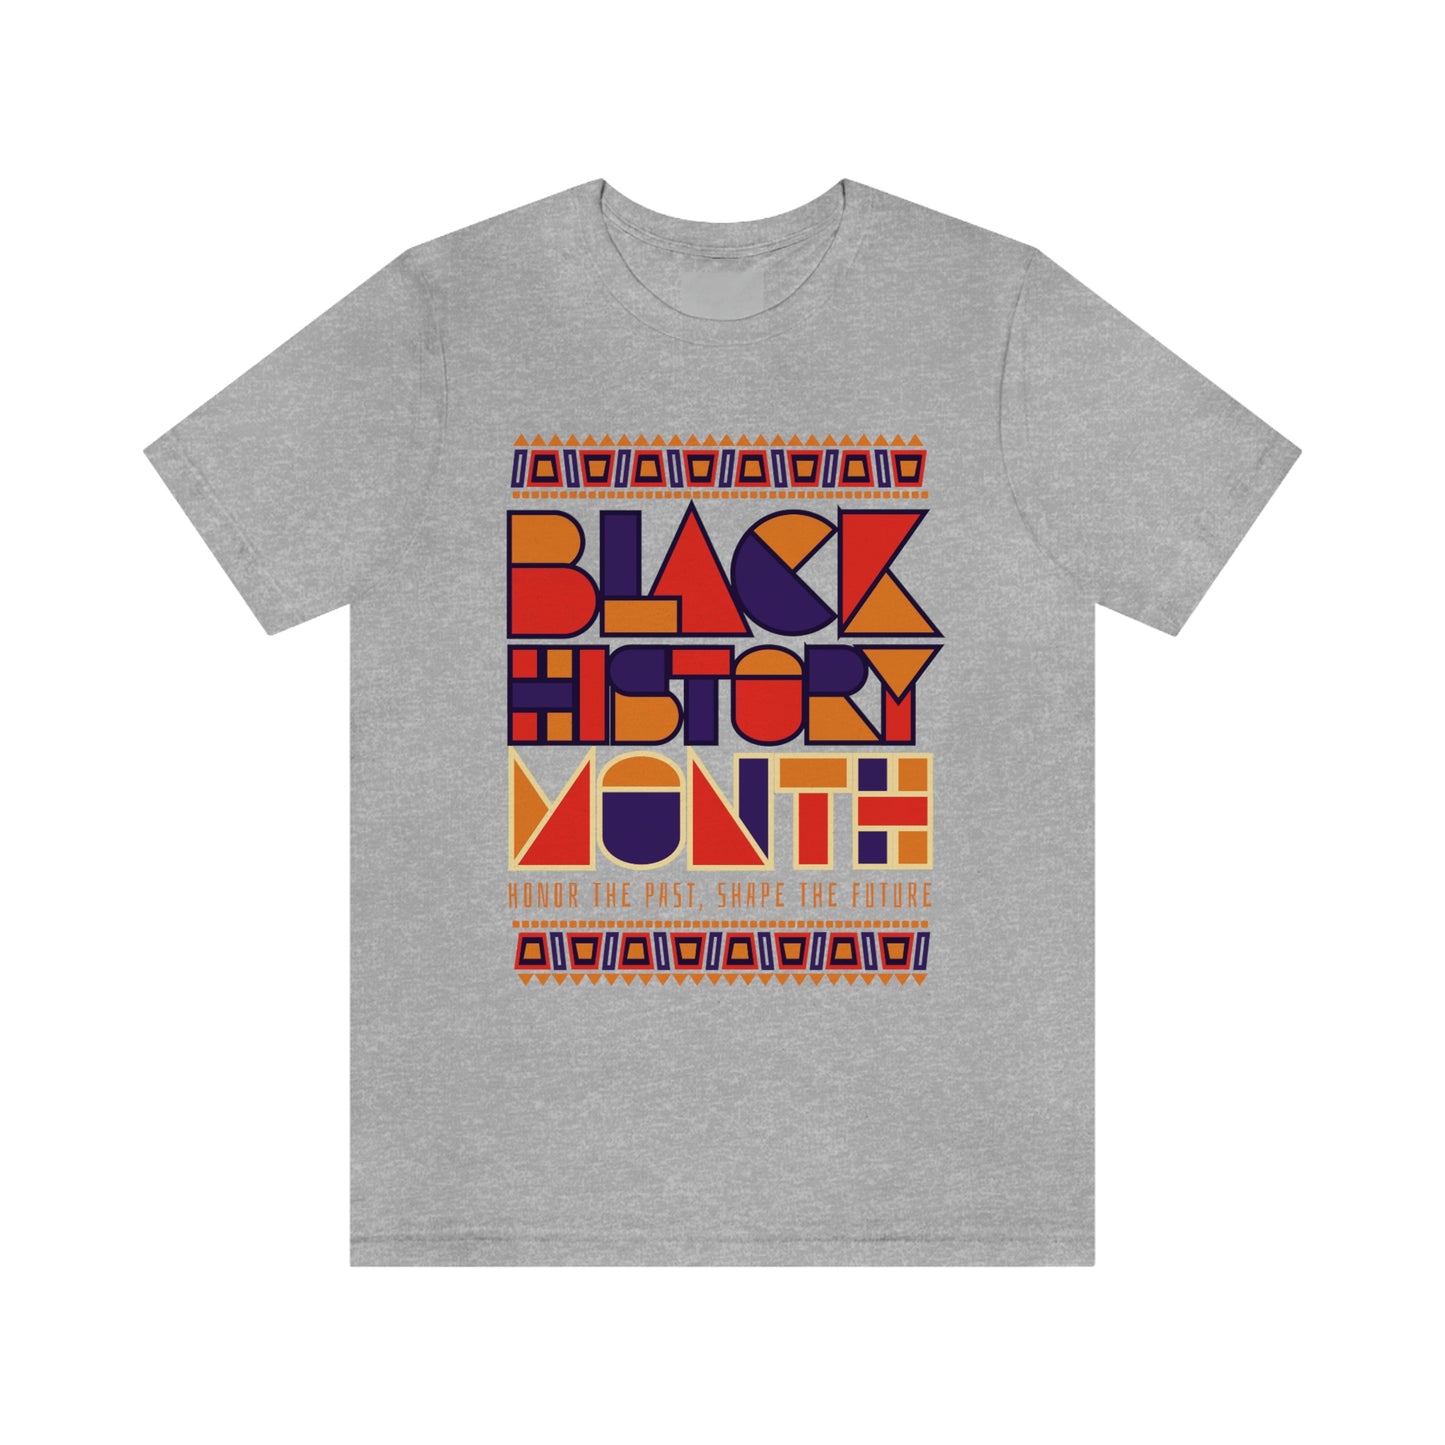 Honor the Past Shape the Future T-Shirt